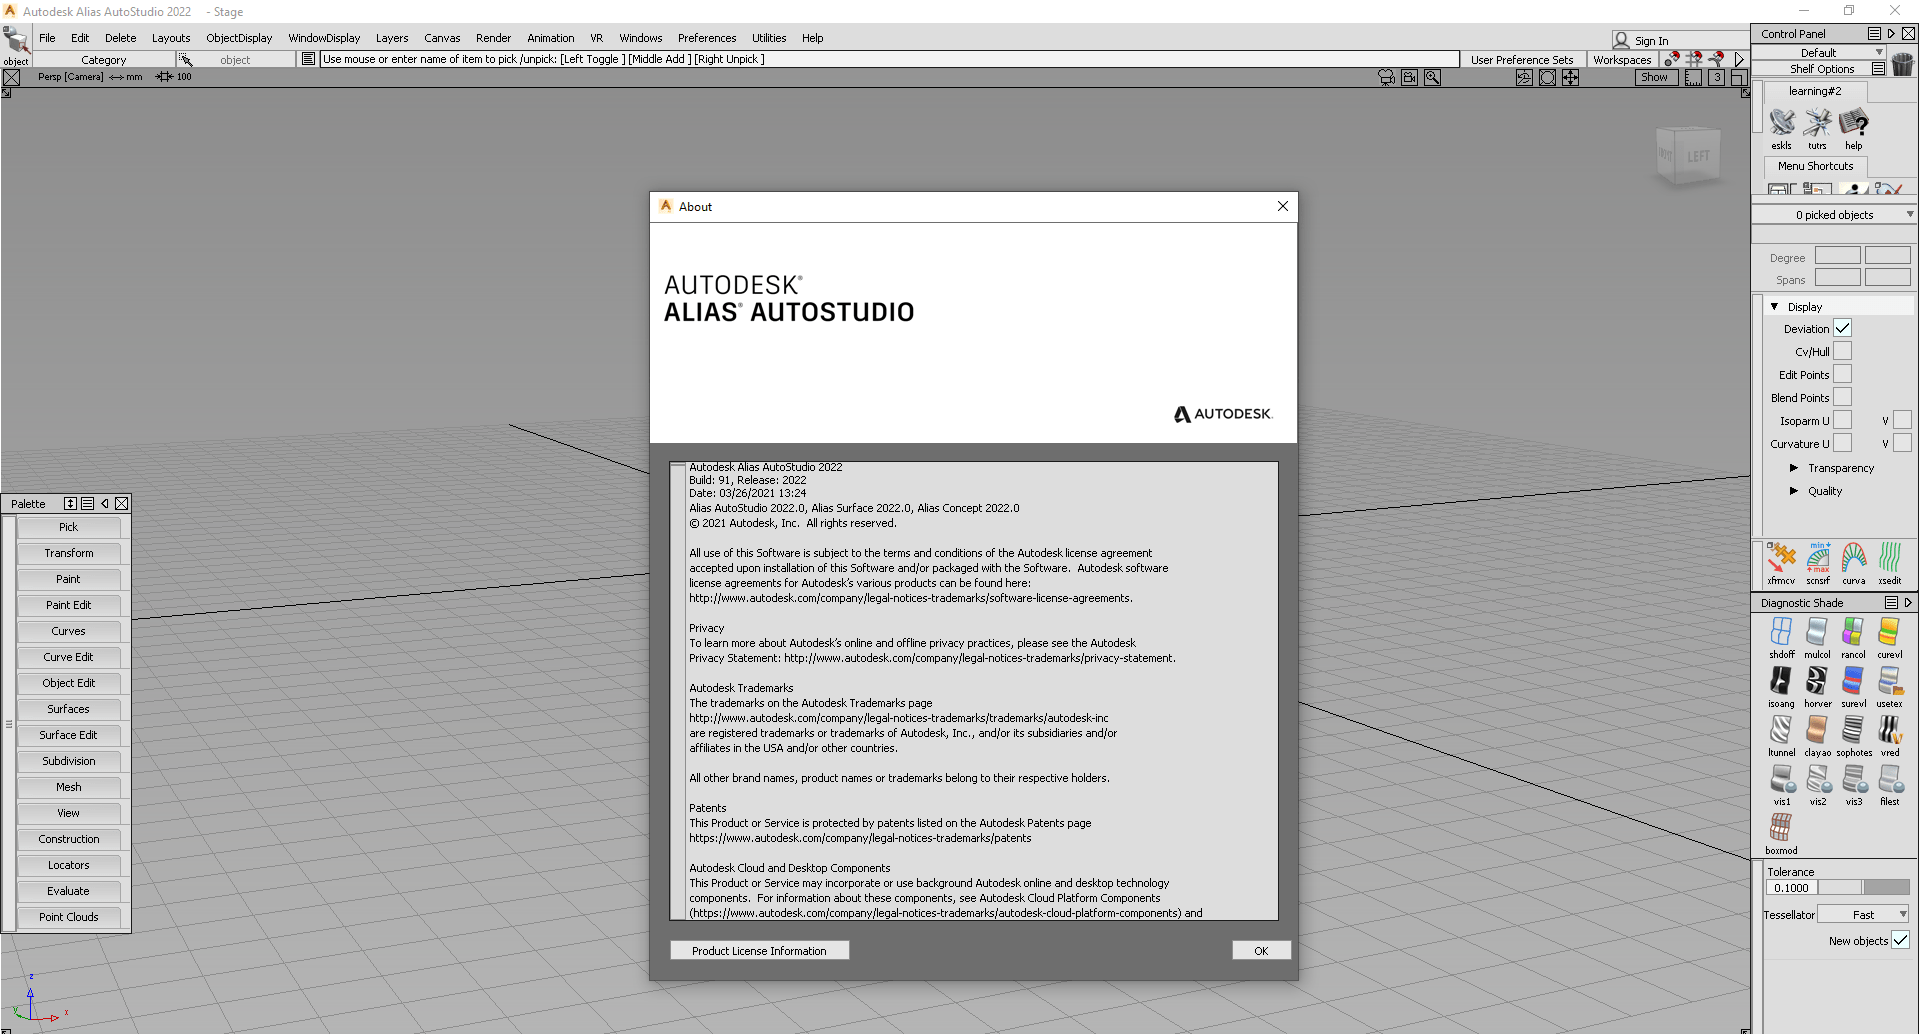 Autodesk Alias AutoStudio 2022 (x64)